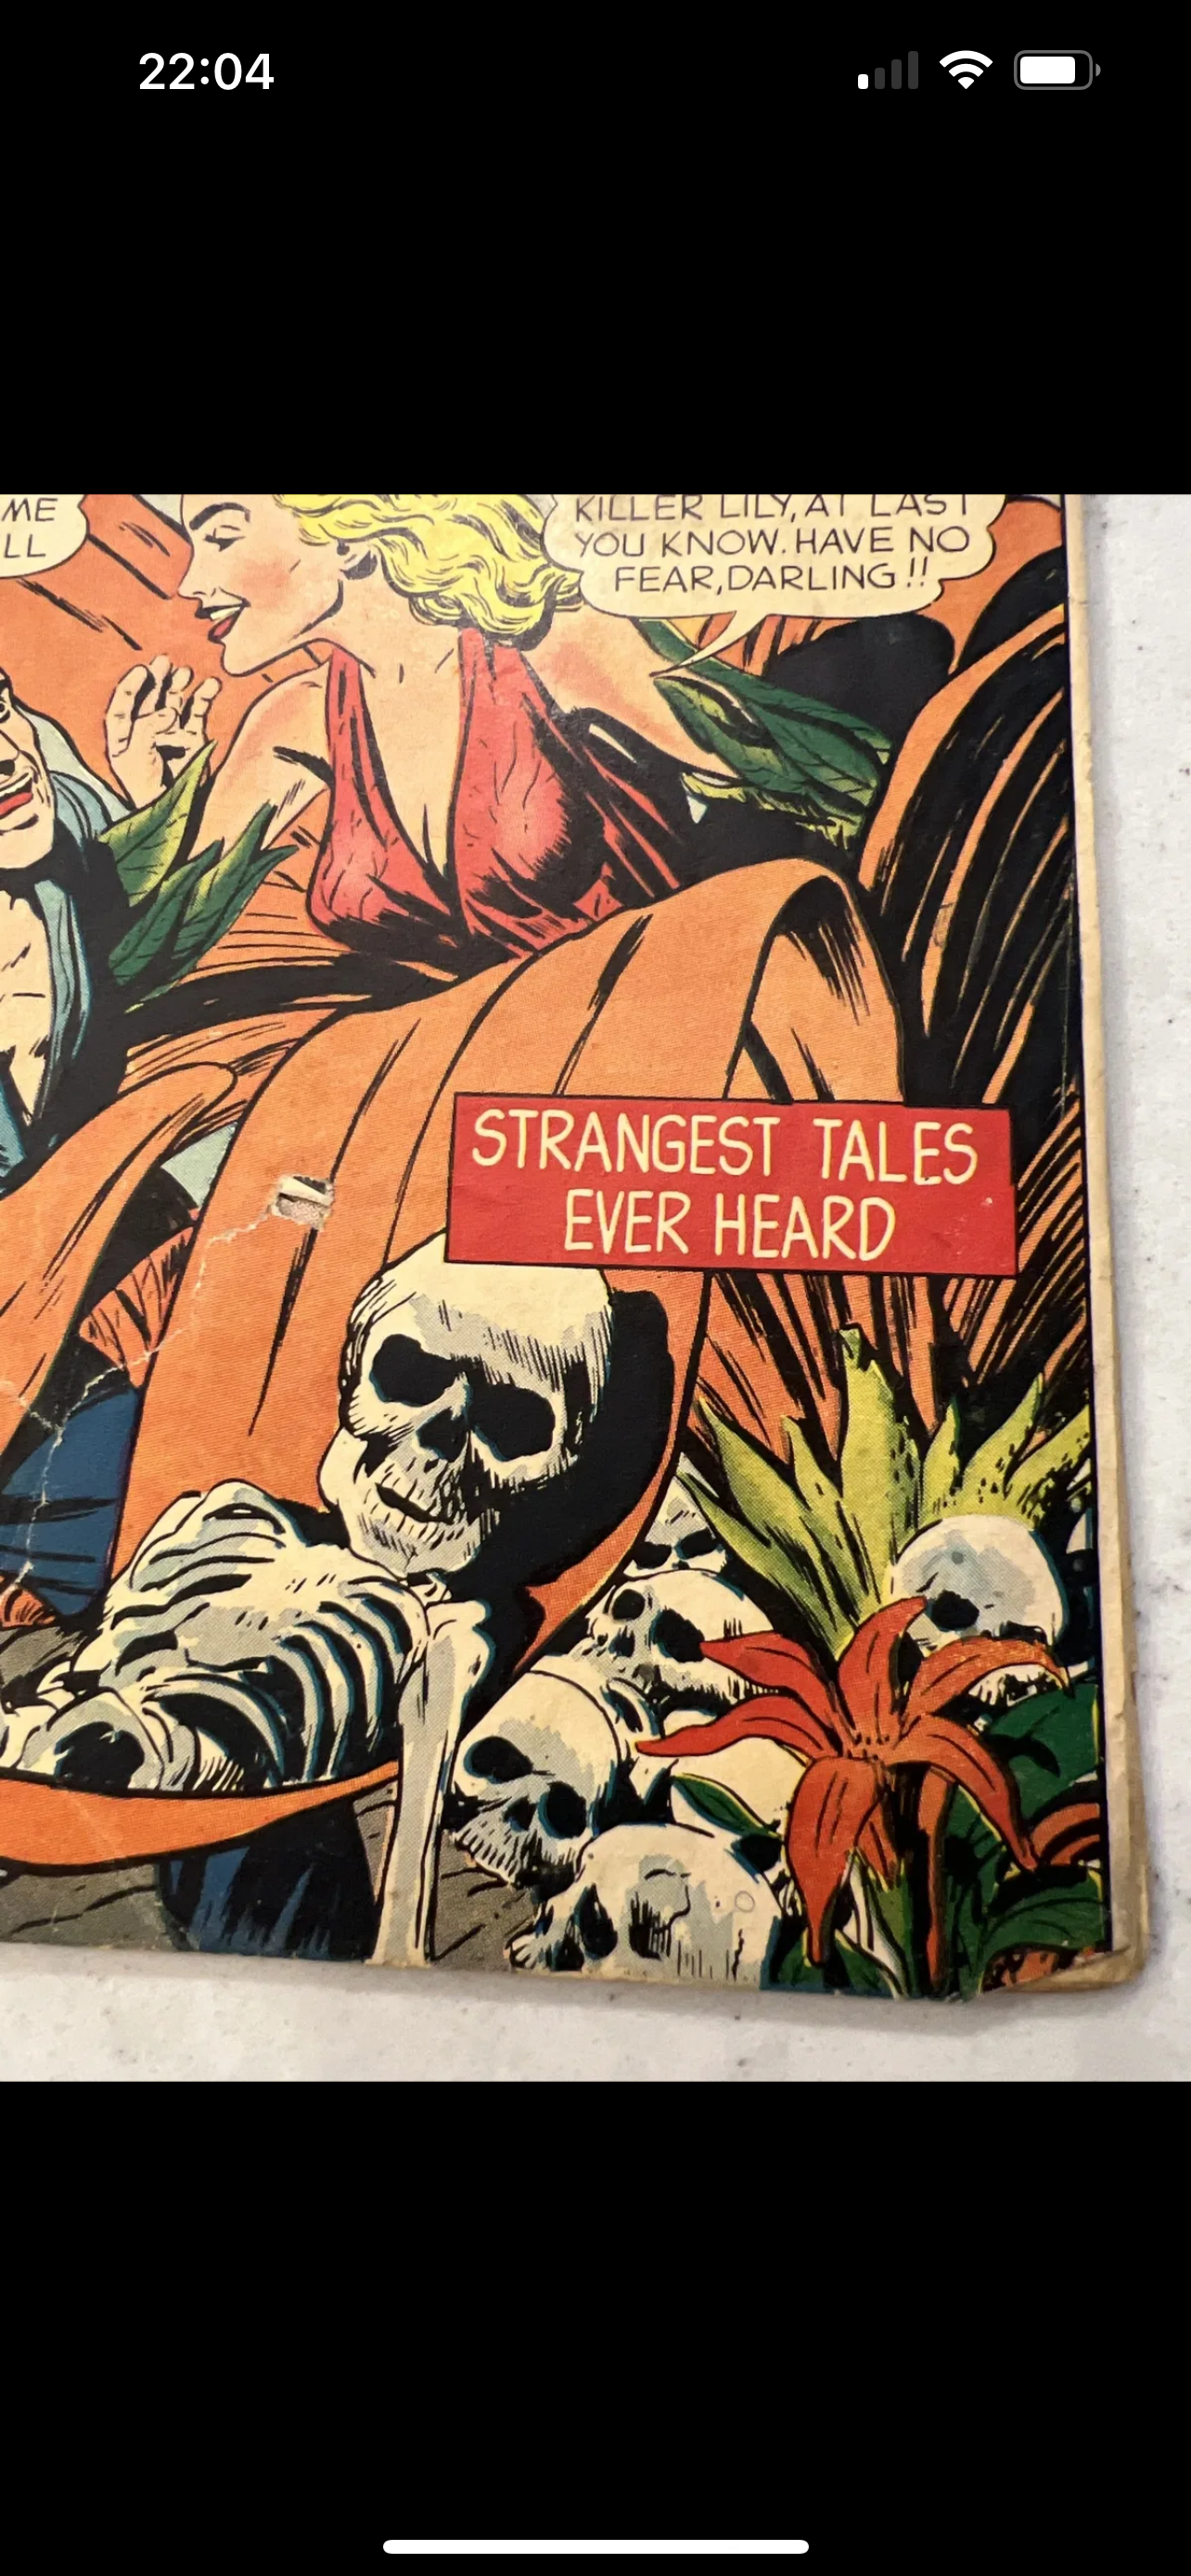 Mysterious Adventures #8 (Story Comics 1952) Pre Code Horror